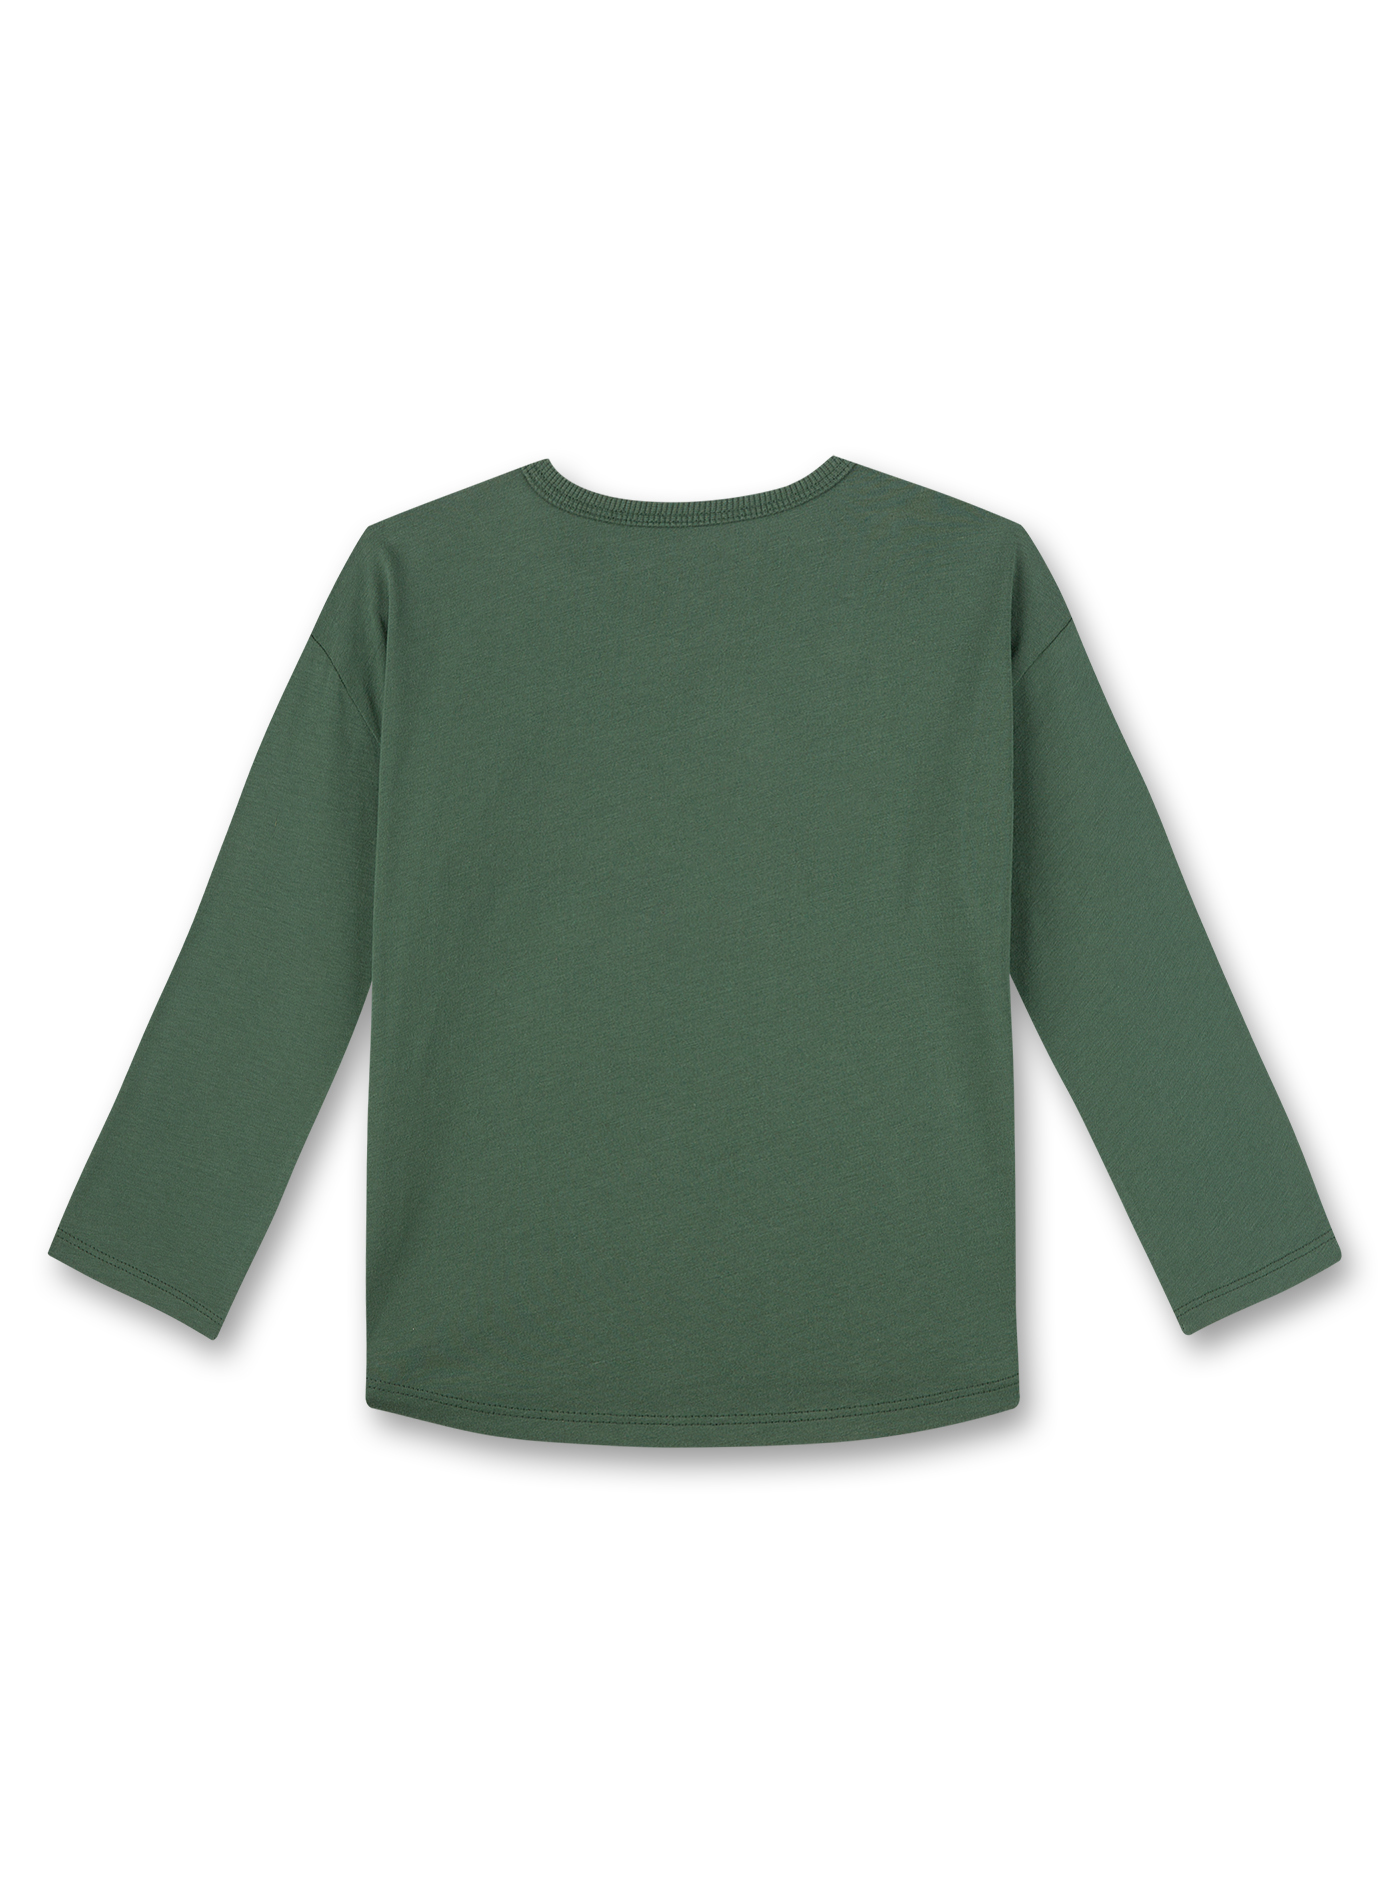 Mädchen-Shirt langarm Grün